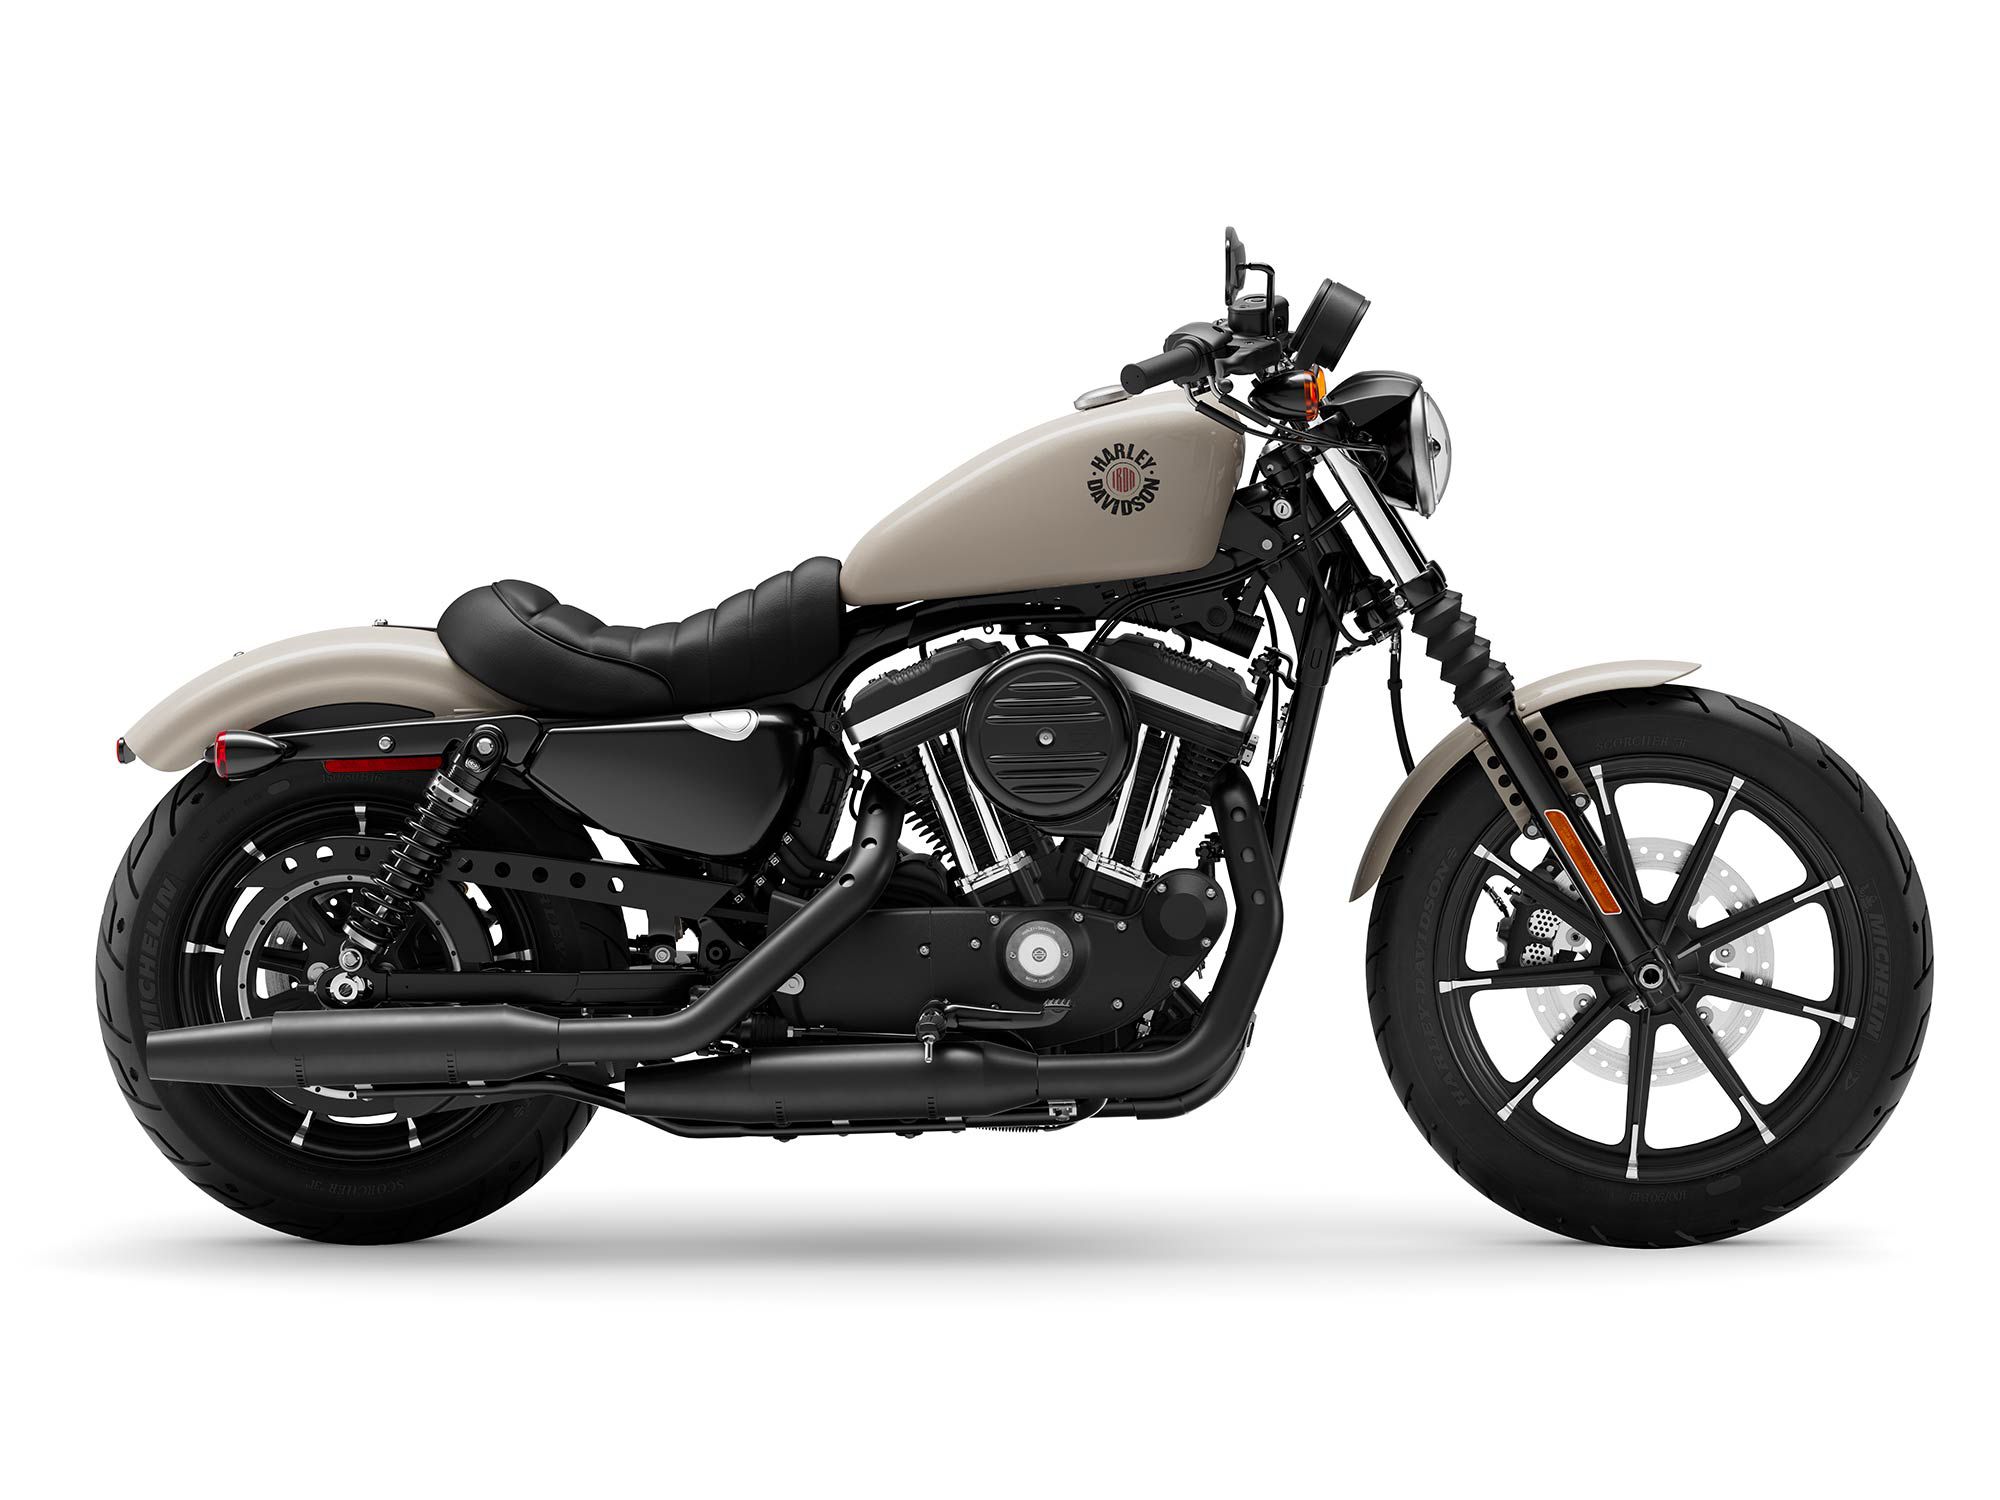 2022 Harley-Davidson Iron 883 in White Sand Pearl.